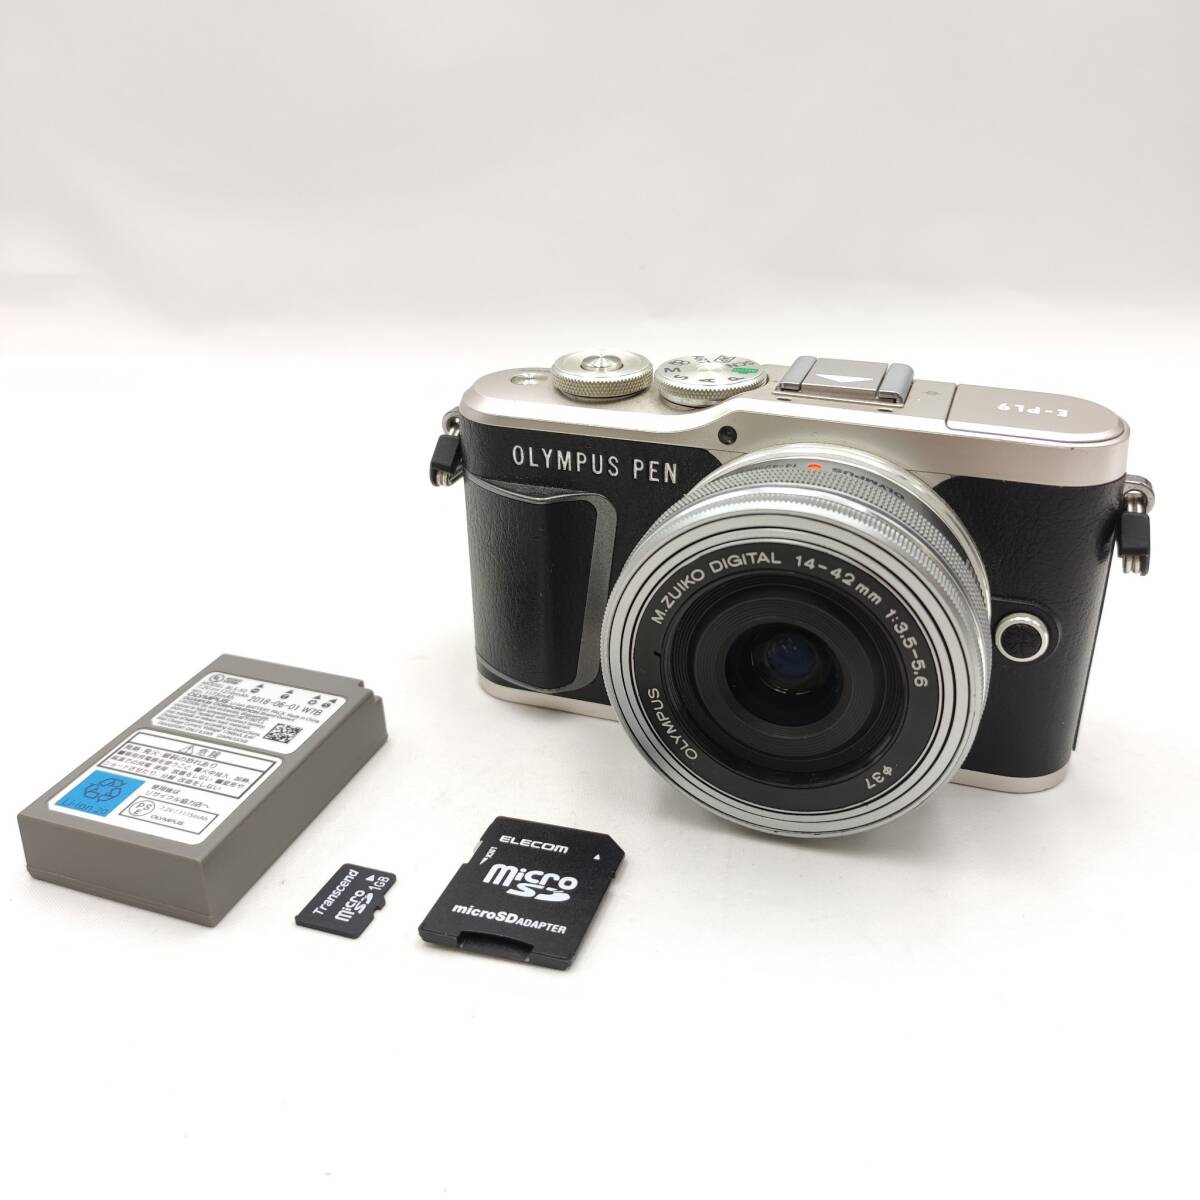 BCm145I 60 OLYMPUS PEN E-PL9 ペン ミラーレス一眼レフカメラ microSD1GB付き レンズ M.ZUIKO DIGITAL 14-42mm 1:3.5-5.6 タッチパネル_画像1